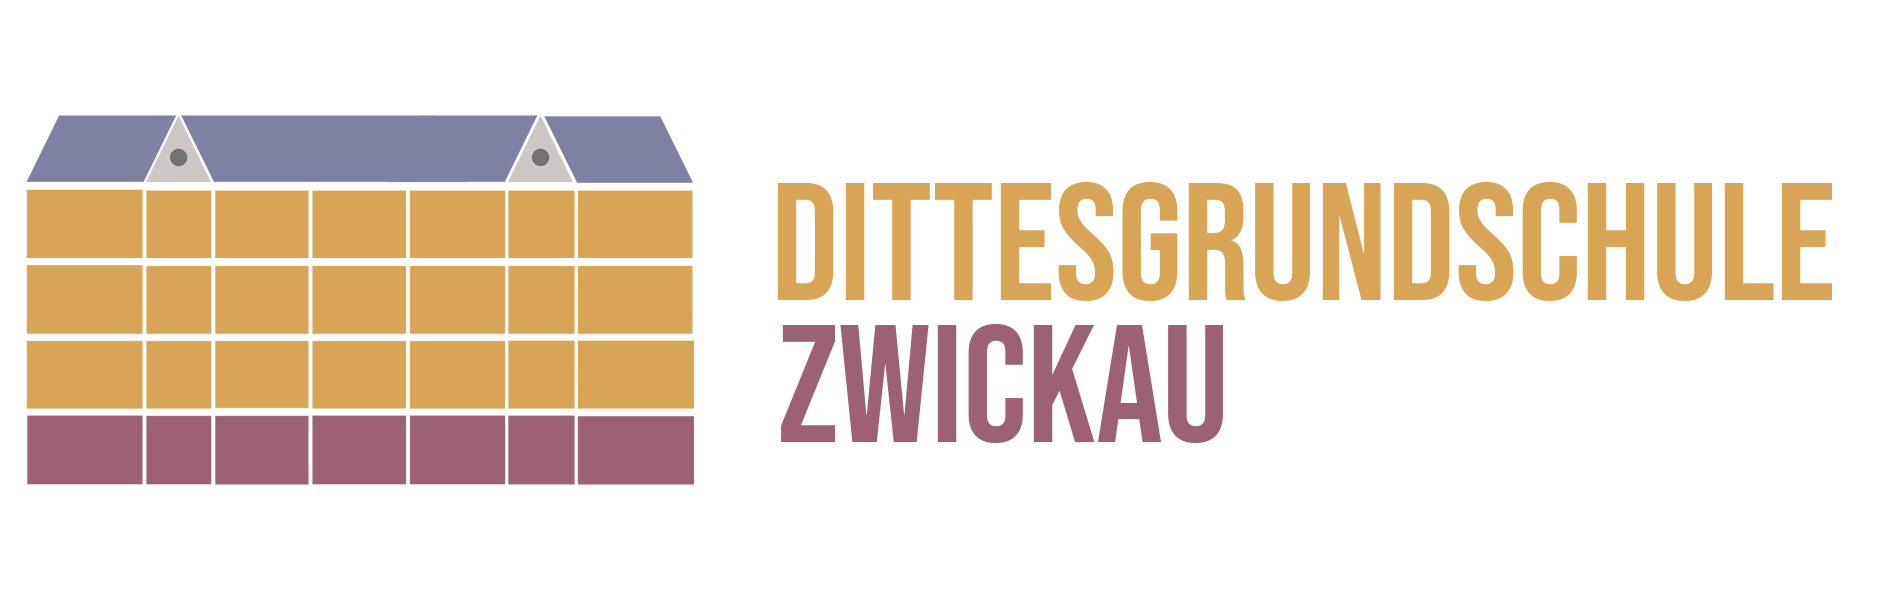 Dittesgrundschule Zwickau